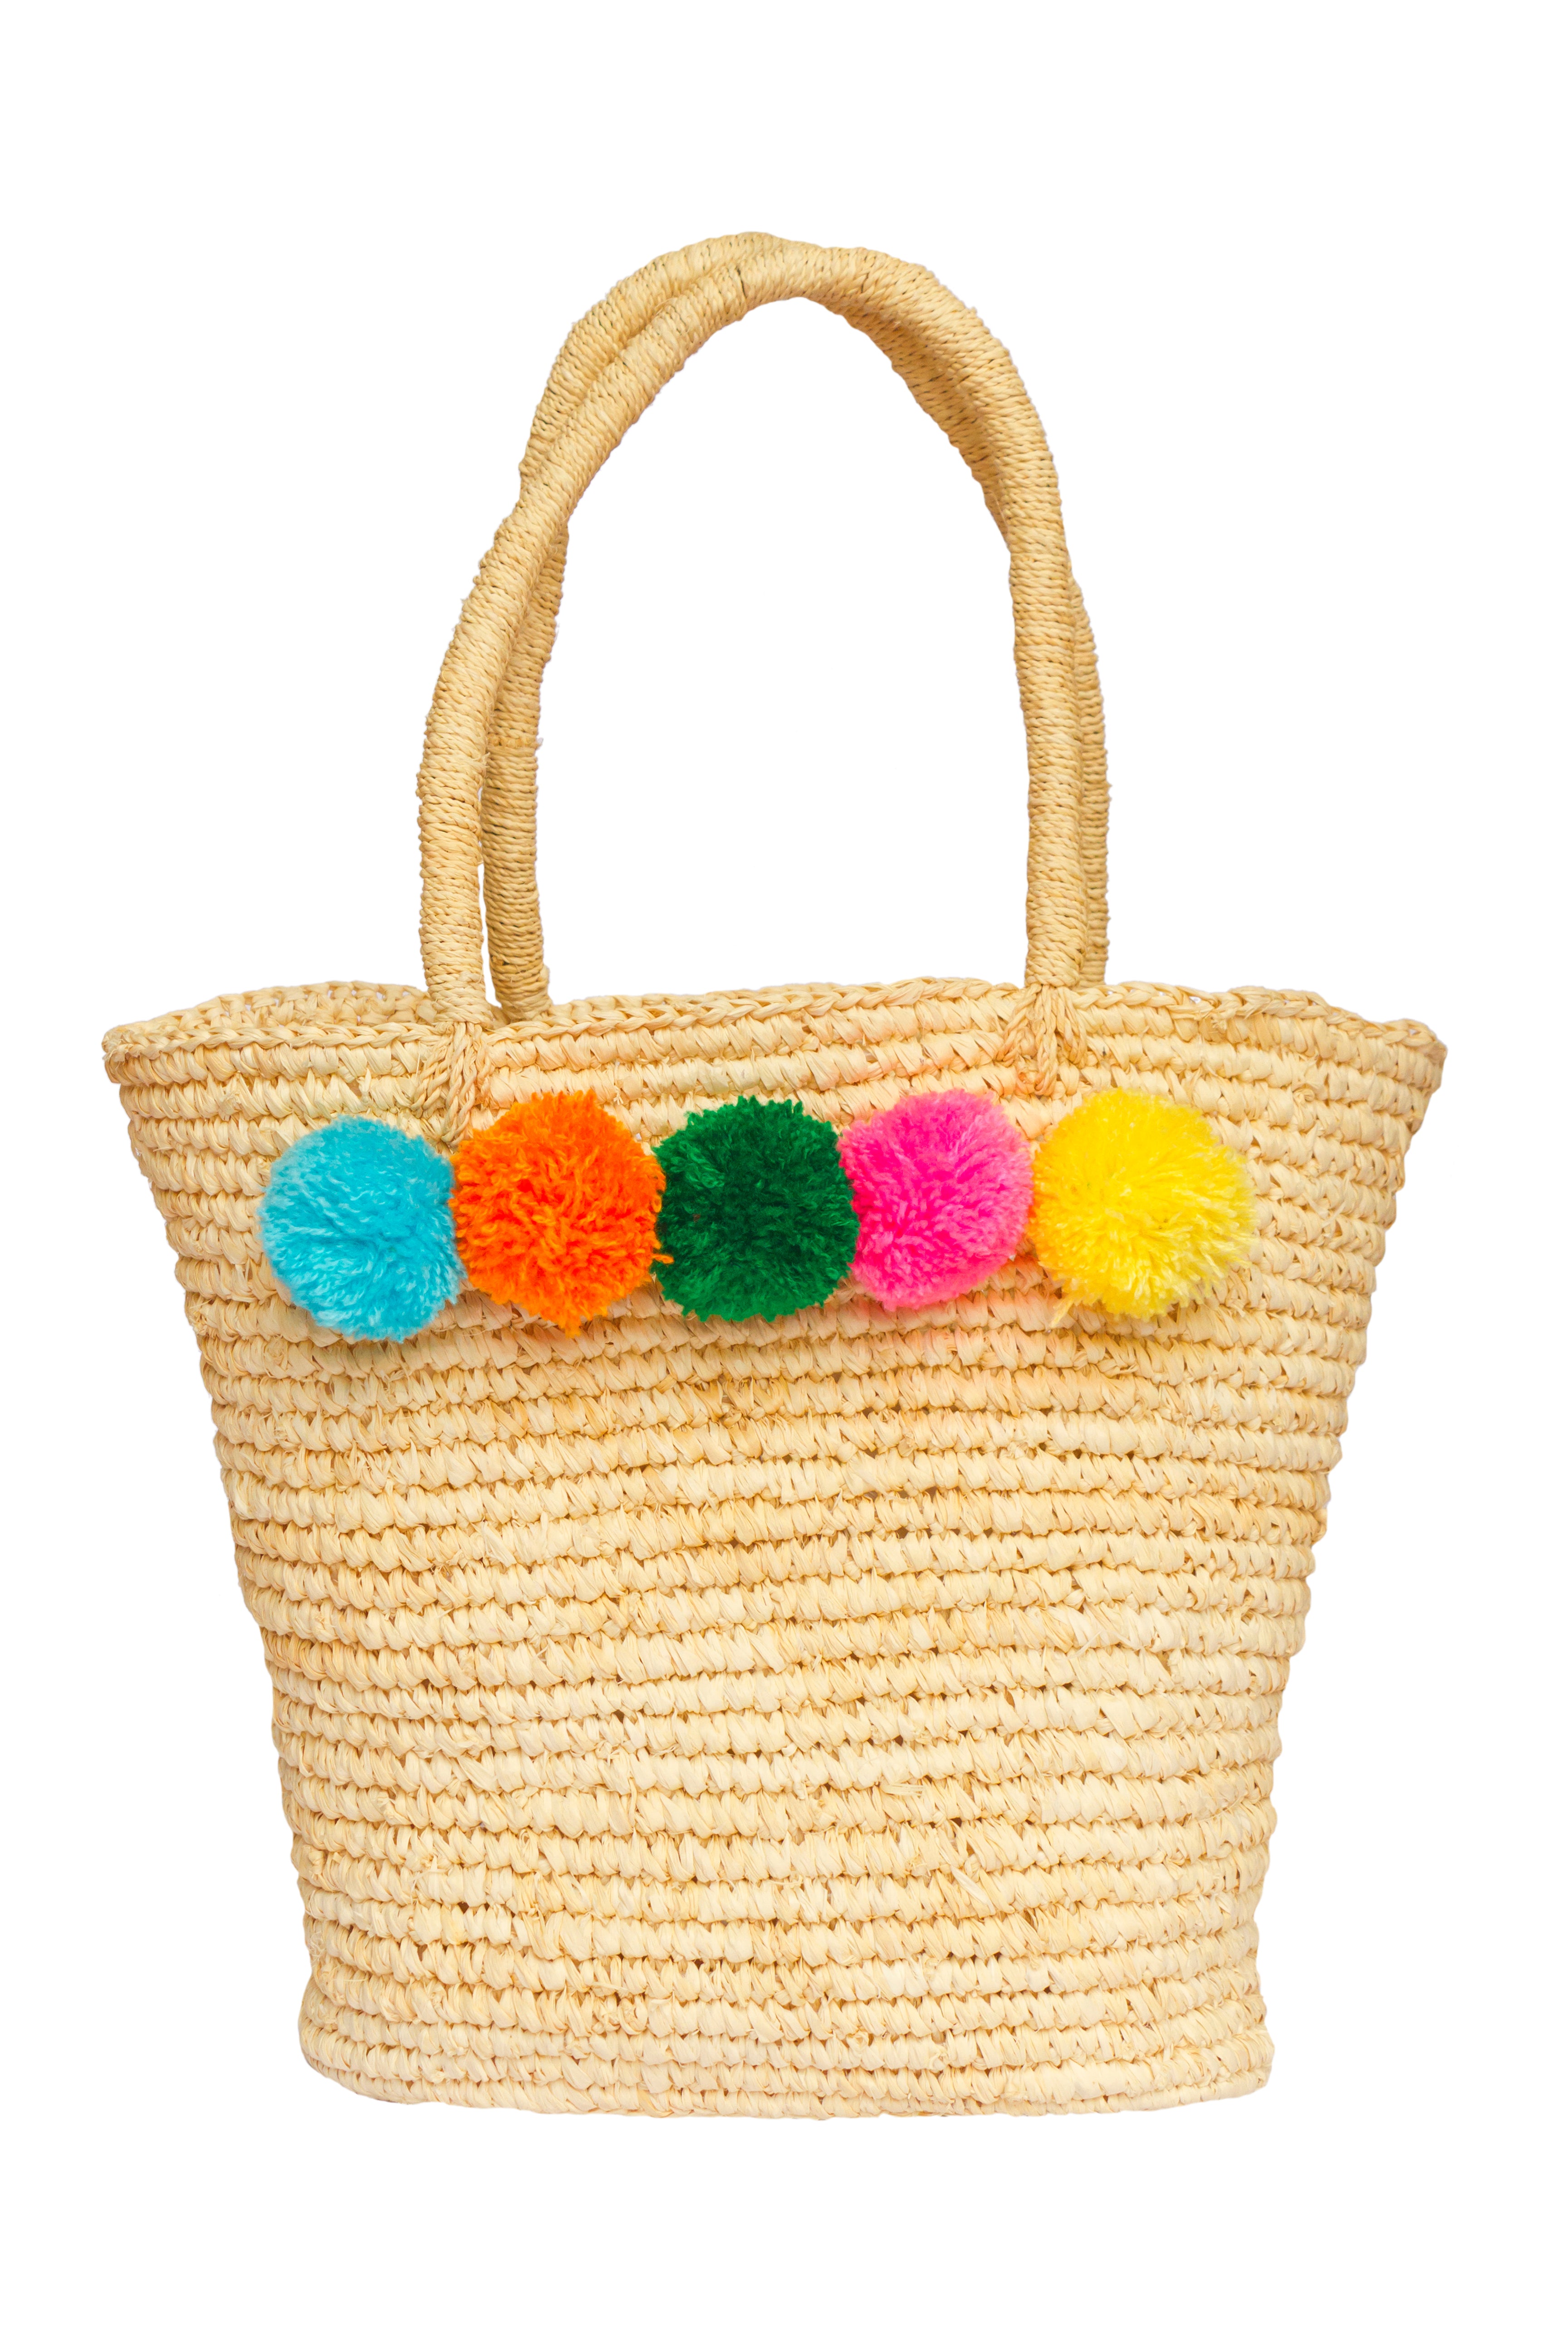 Straw beach tote bag; cruise; vacation; bali bags; straw handbags; colorful beach accessories